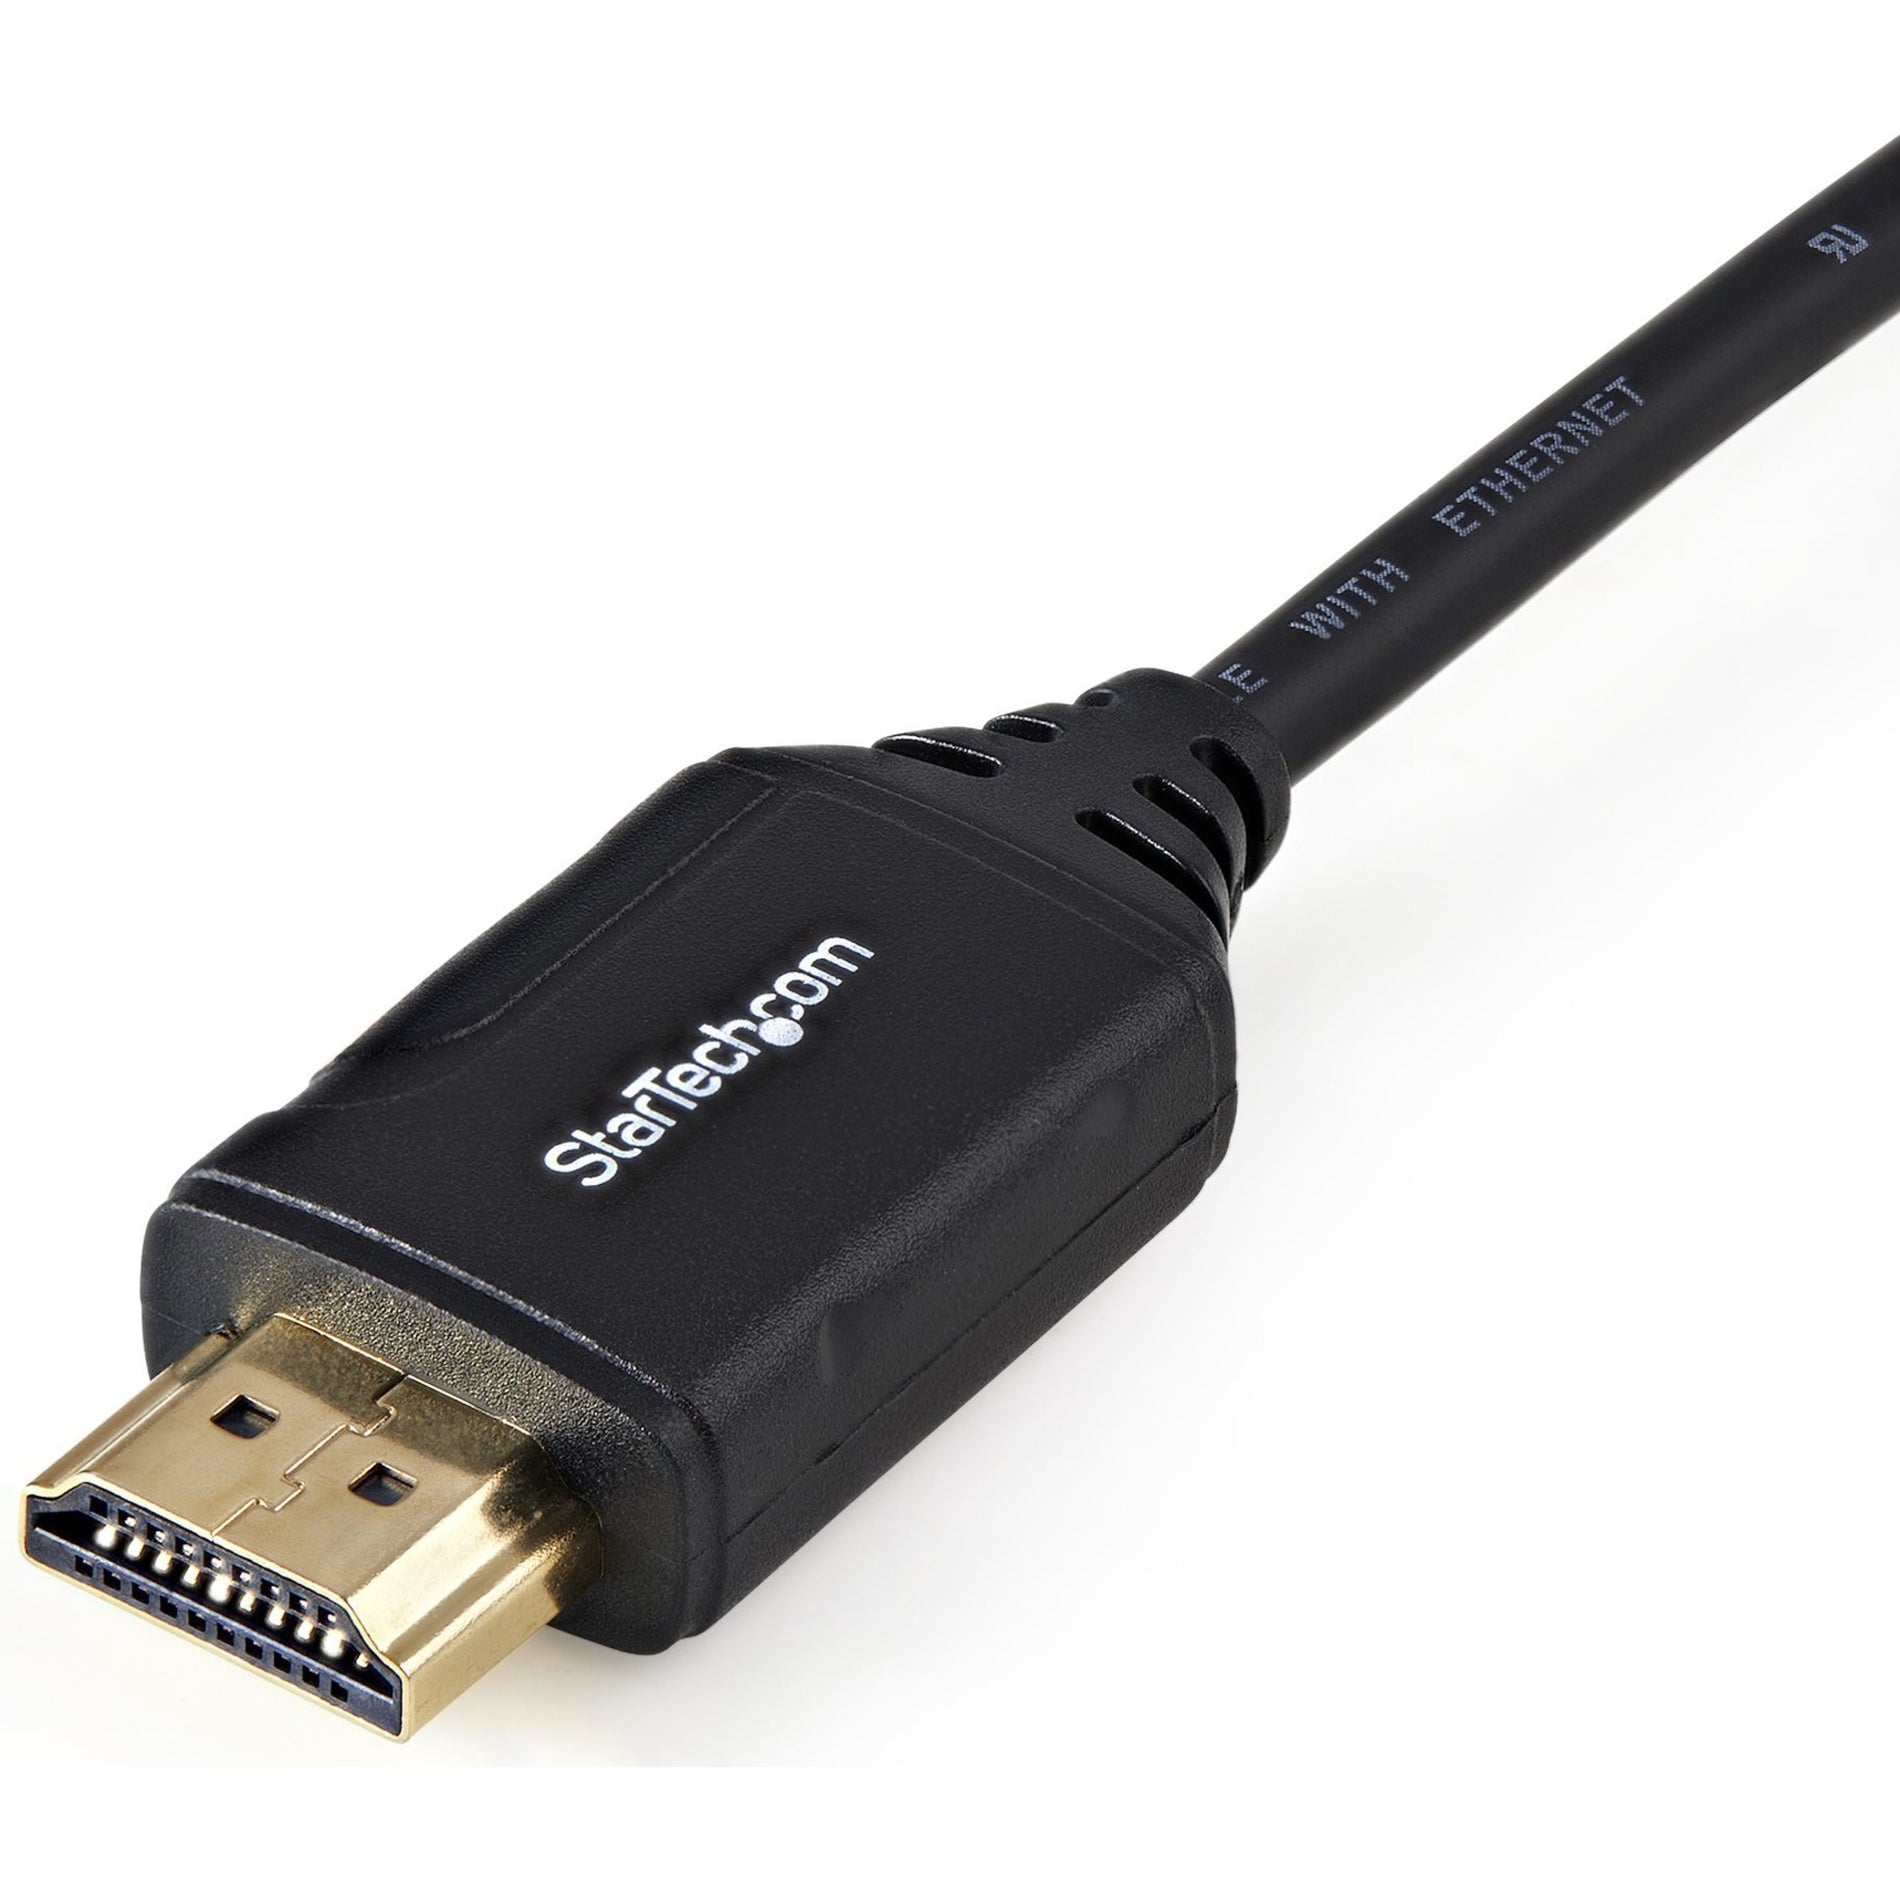 StarTech.com HDMM50CMP Premium High Speed HDMI Cable - 4K 60Hz - 0.5 m, Short HDMI Cable, HDMI 2.0 Cable